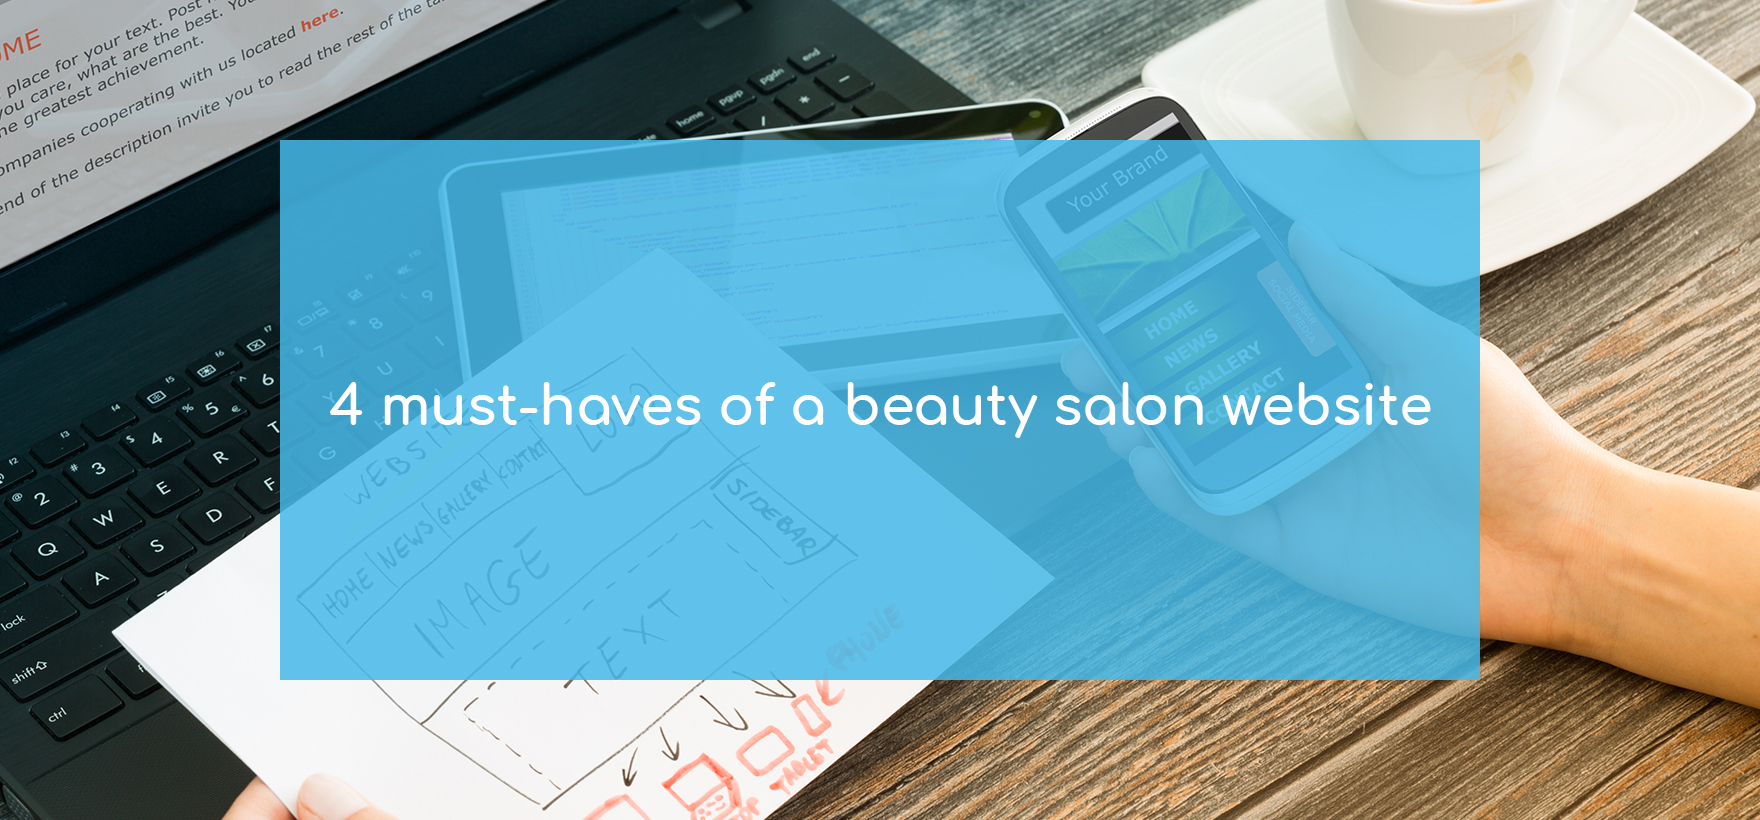 Salon websites ideas. 4 must haves of a beauty salon website